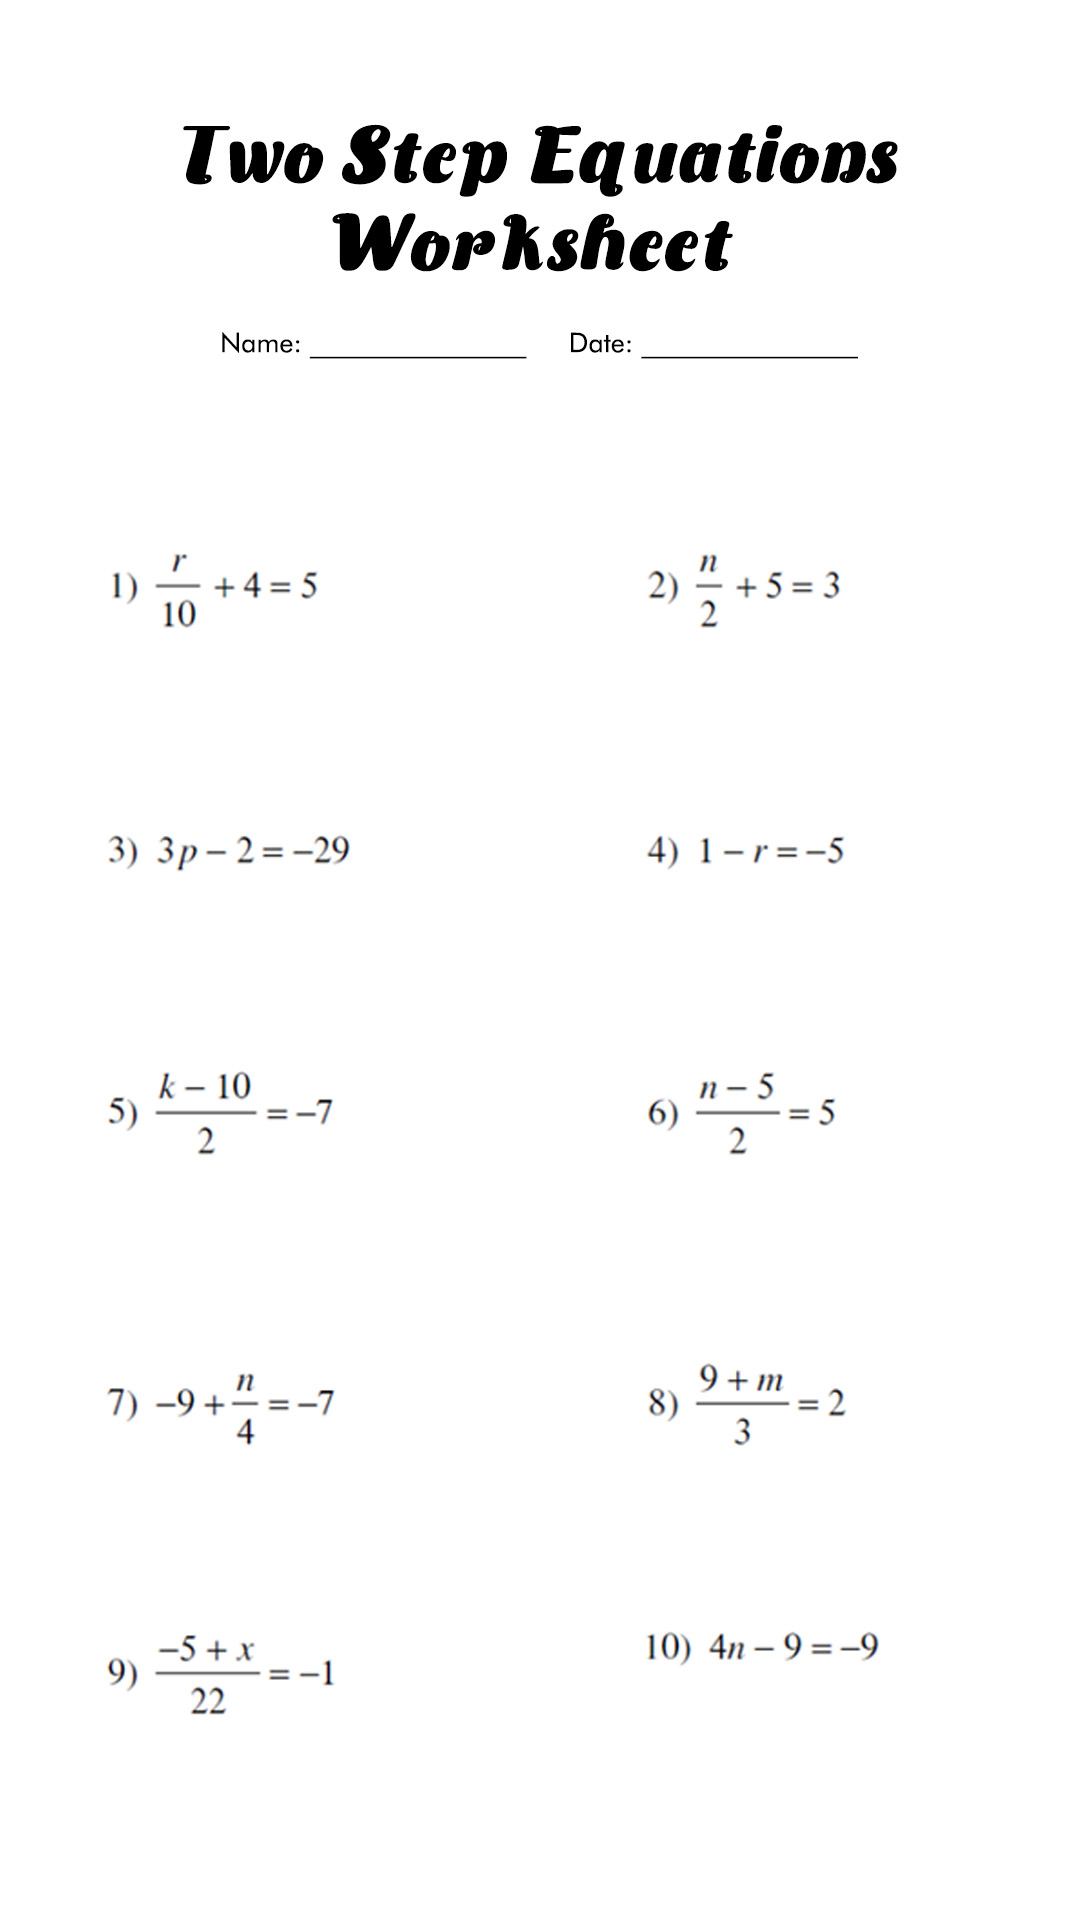 50 Printable 2 Step Equations Worksheets 24